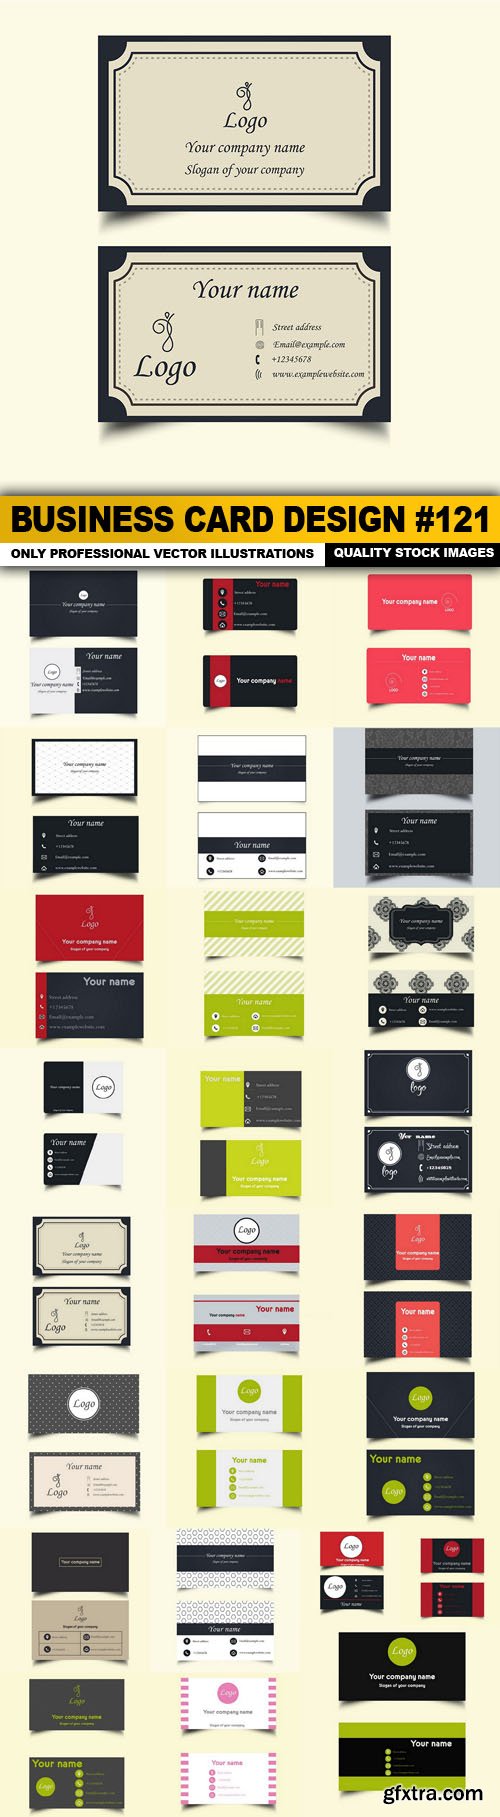 Business Card Design #121 - 25 Vector